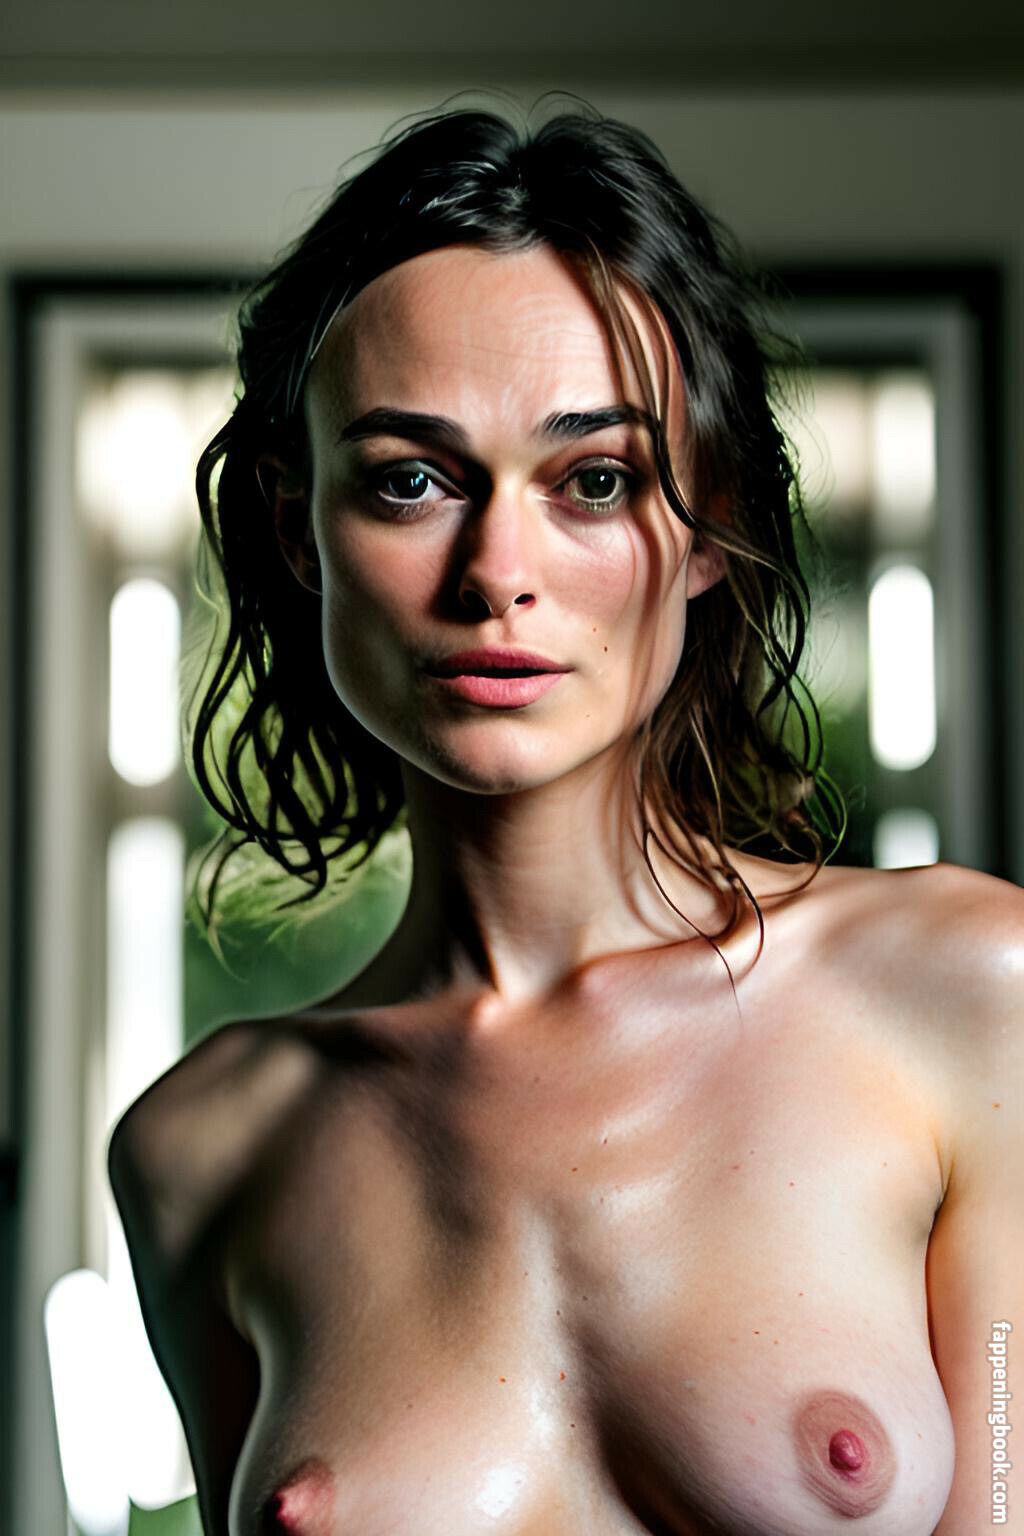 https://fappeningbook.com/photos/a/i/ai-generated-celebrity-nudes/1000/160.jpg